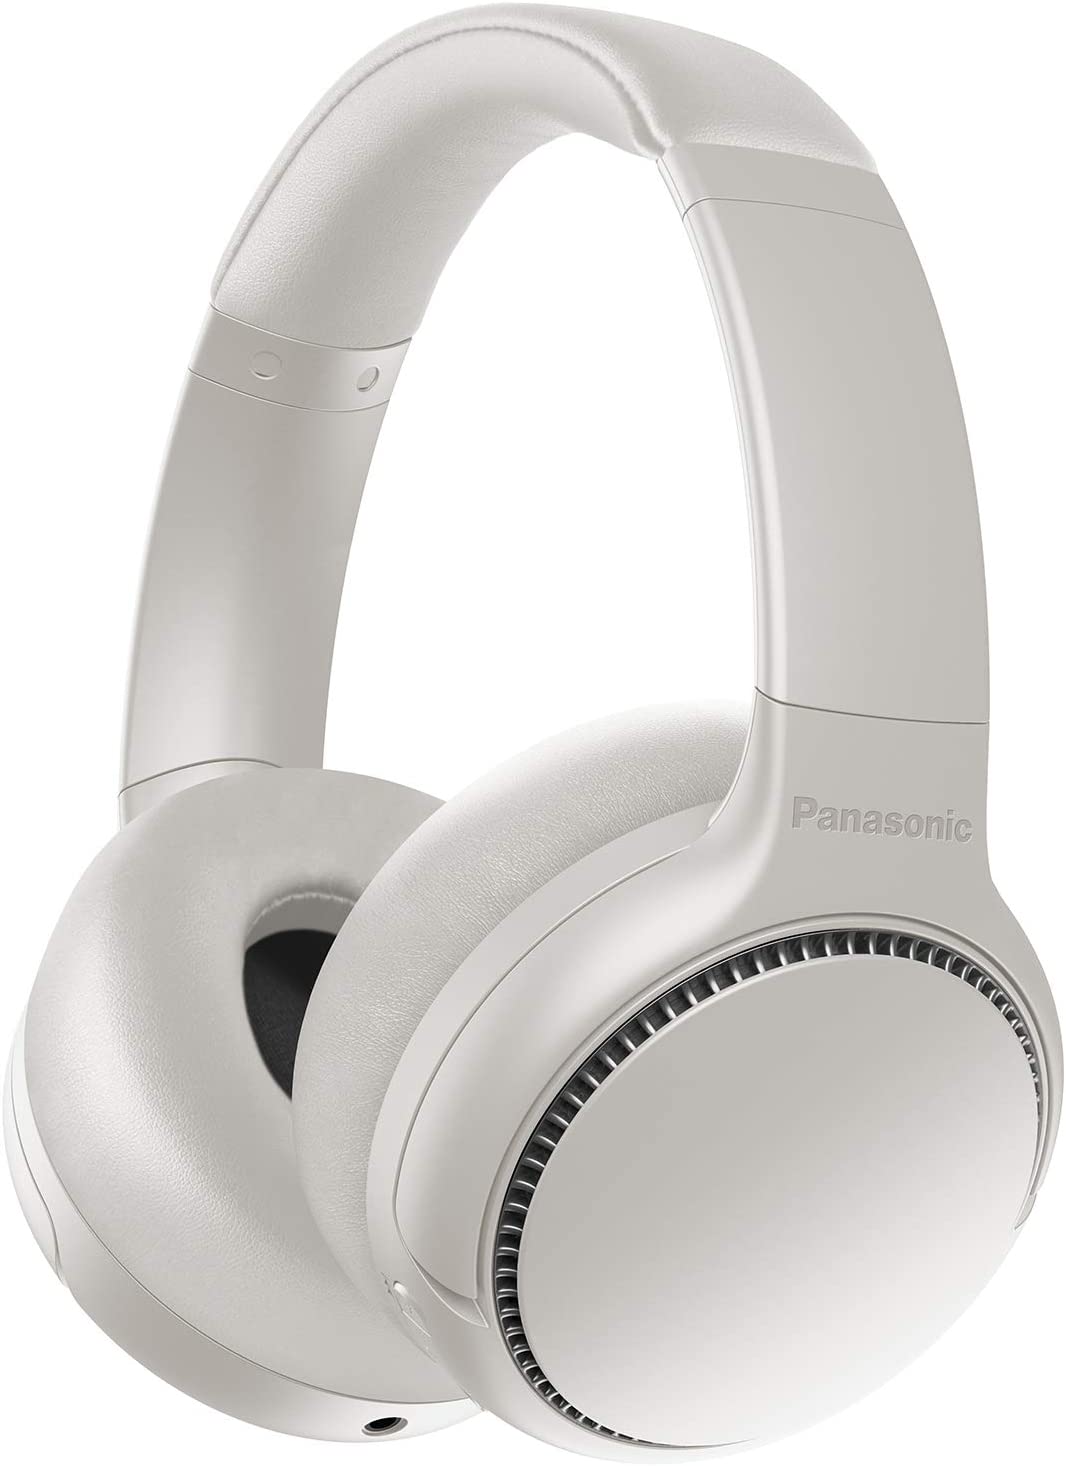 Panasonic RB-M700B Deep Bass Wireless Bluetooth Headphones